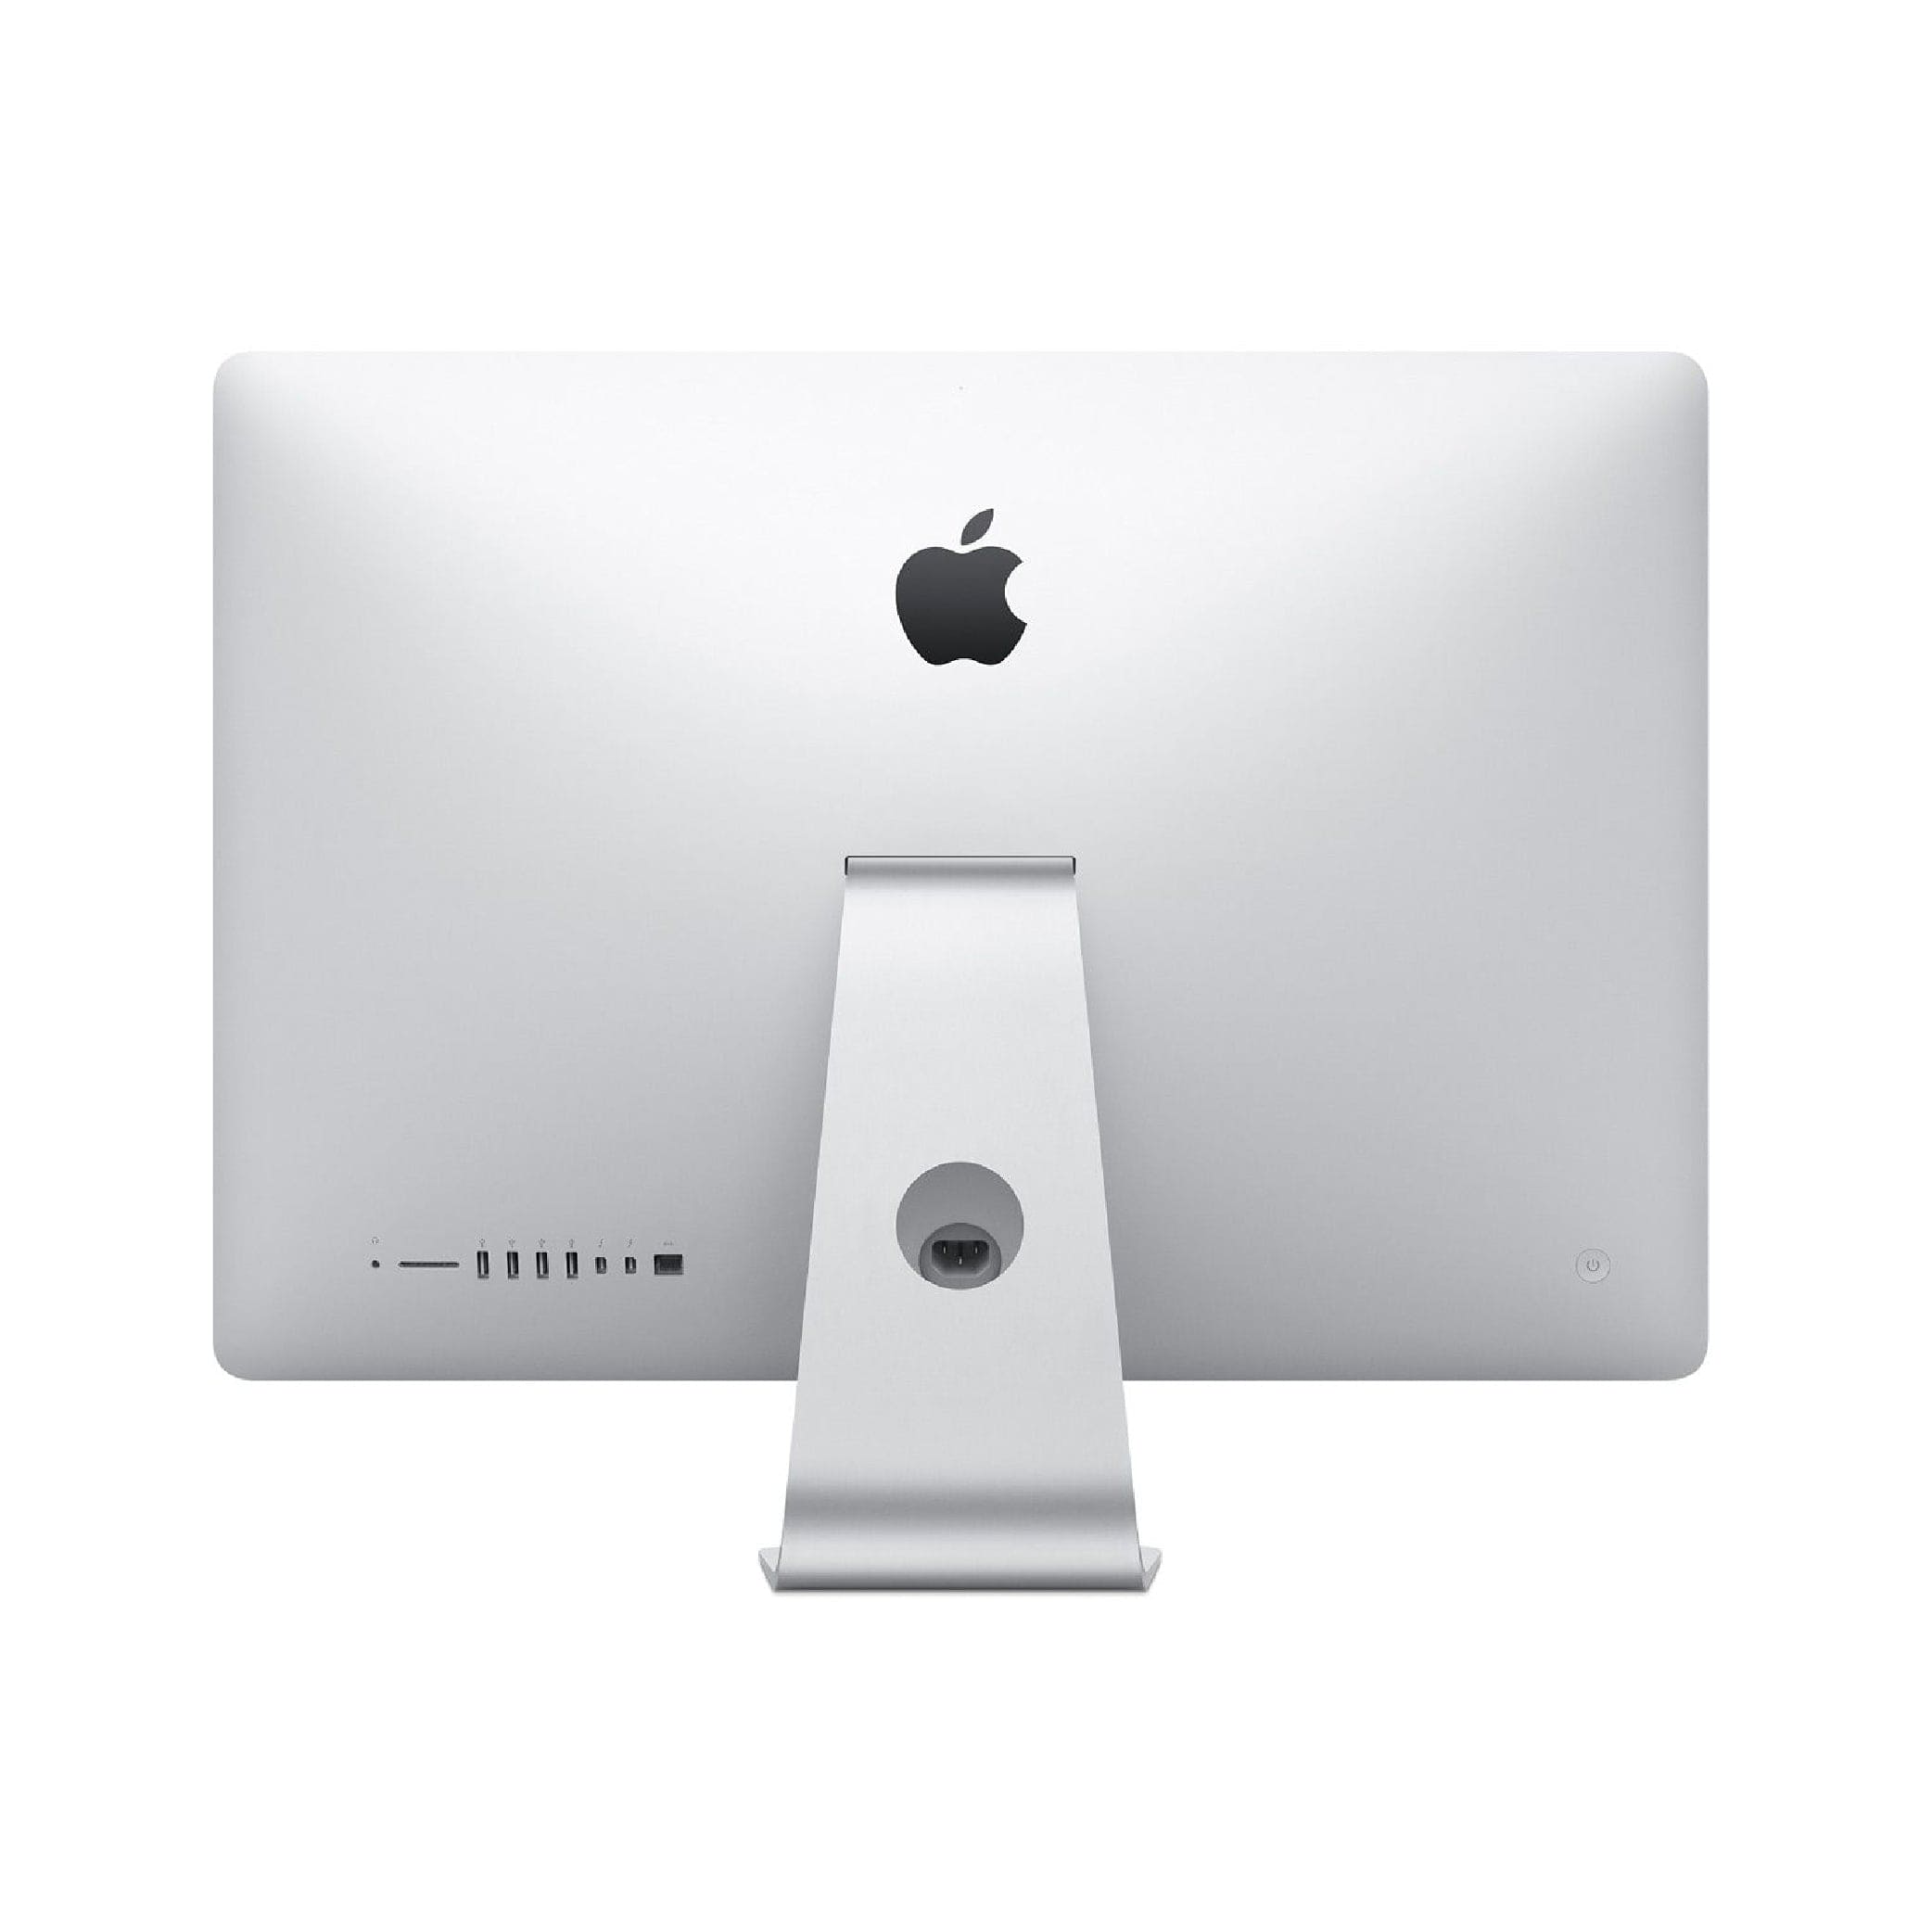 iMac 27-inch Retina (Late 2015) Core i5 3.2GHz MK462LL/A - HDD 1000 GB - 8GB